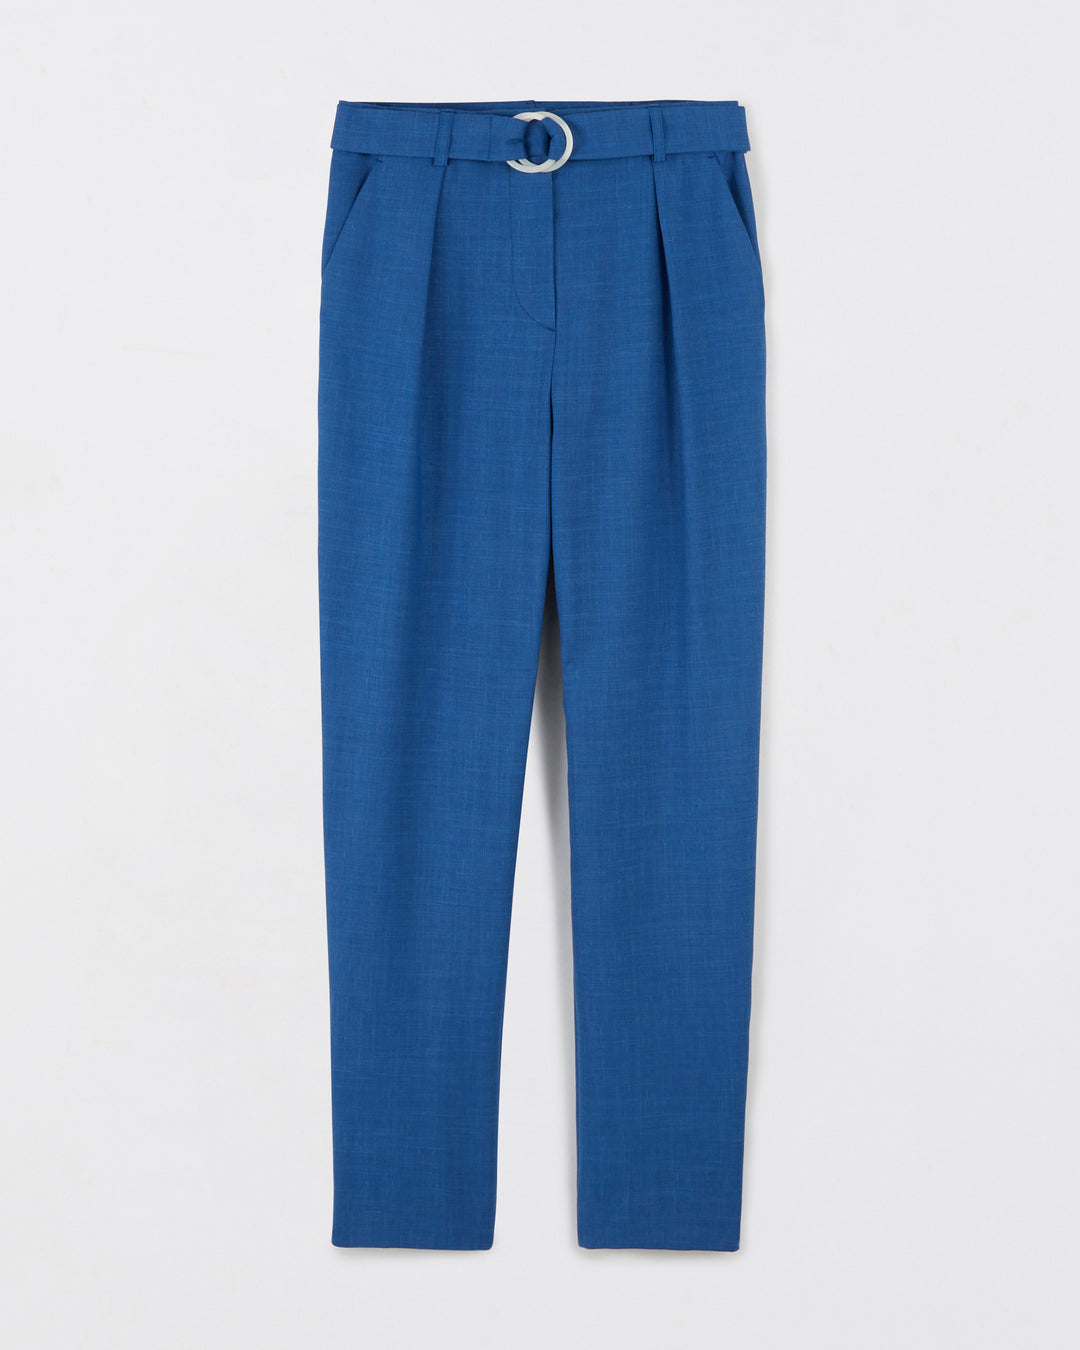 Casablanca tailored pants - Azure blue